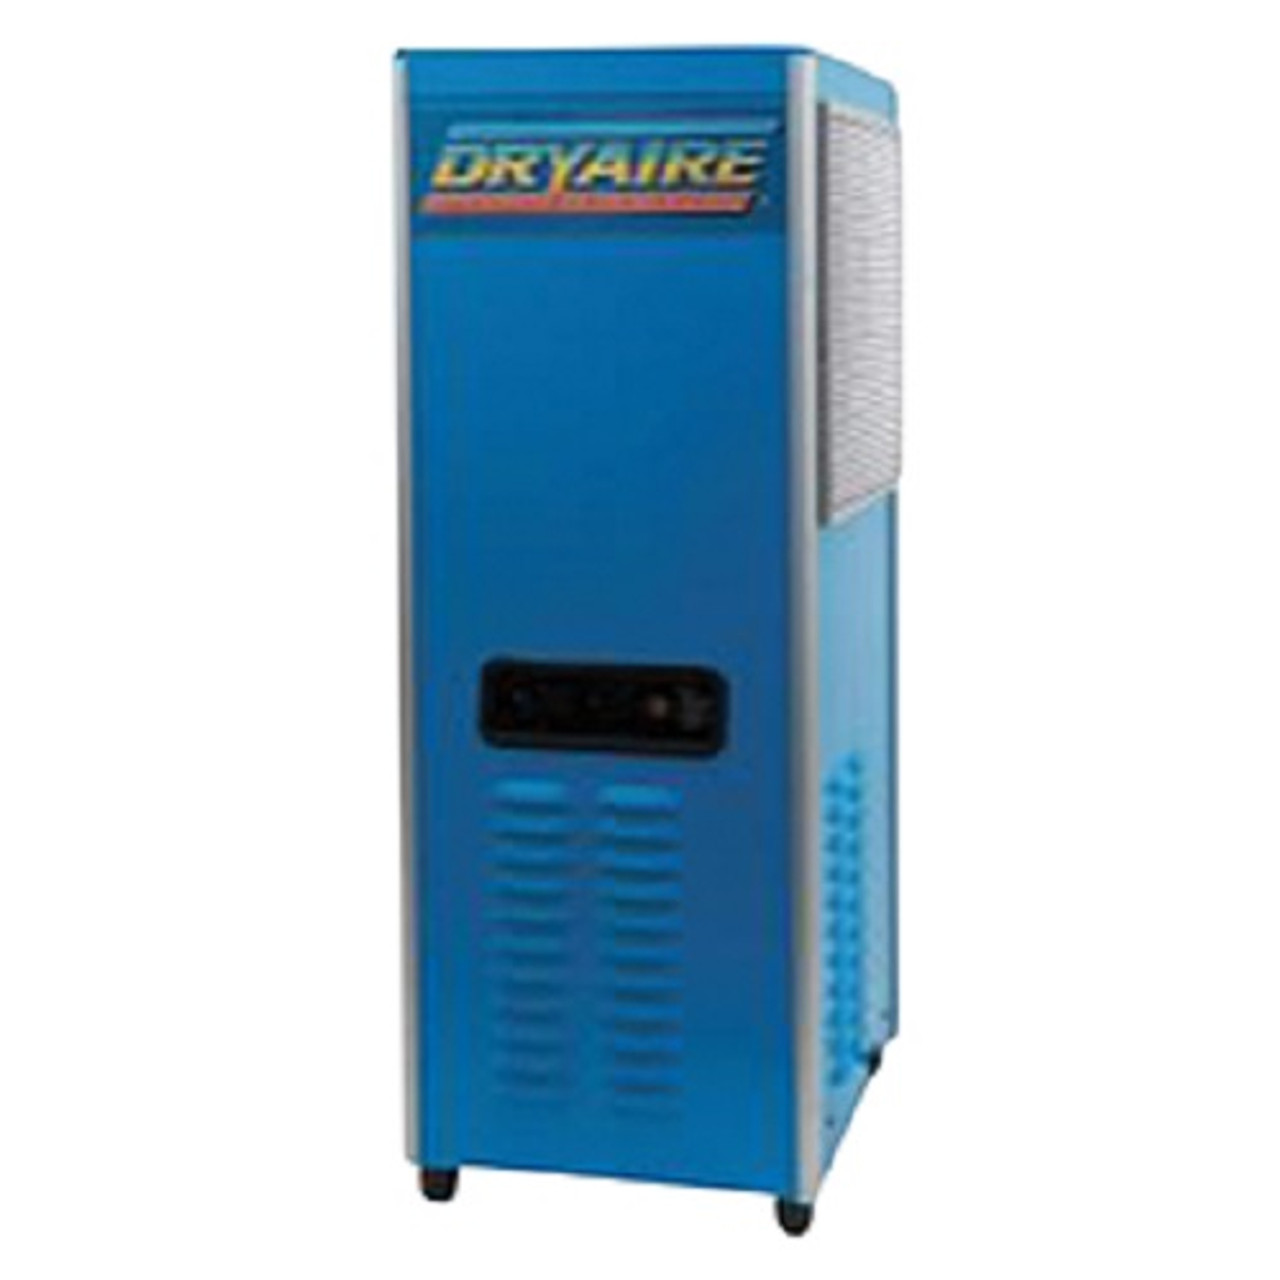 Refrigerated Air Dryer, 35CFM